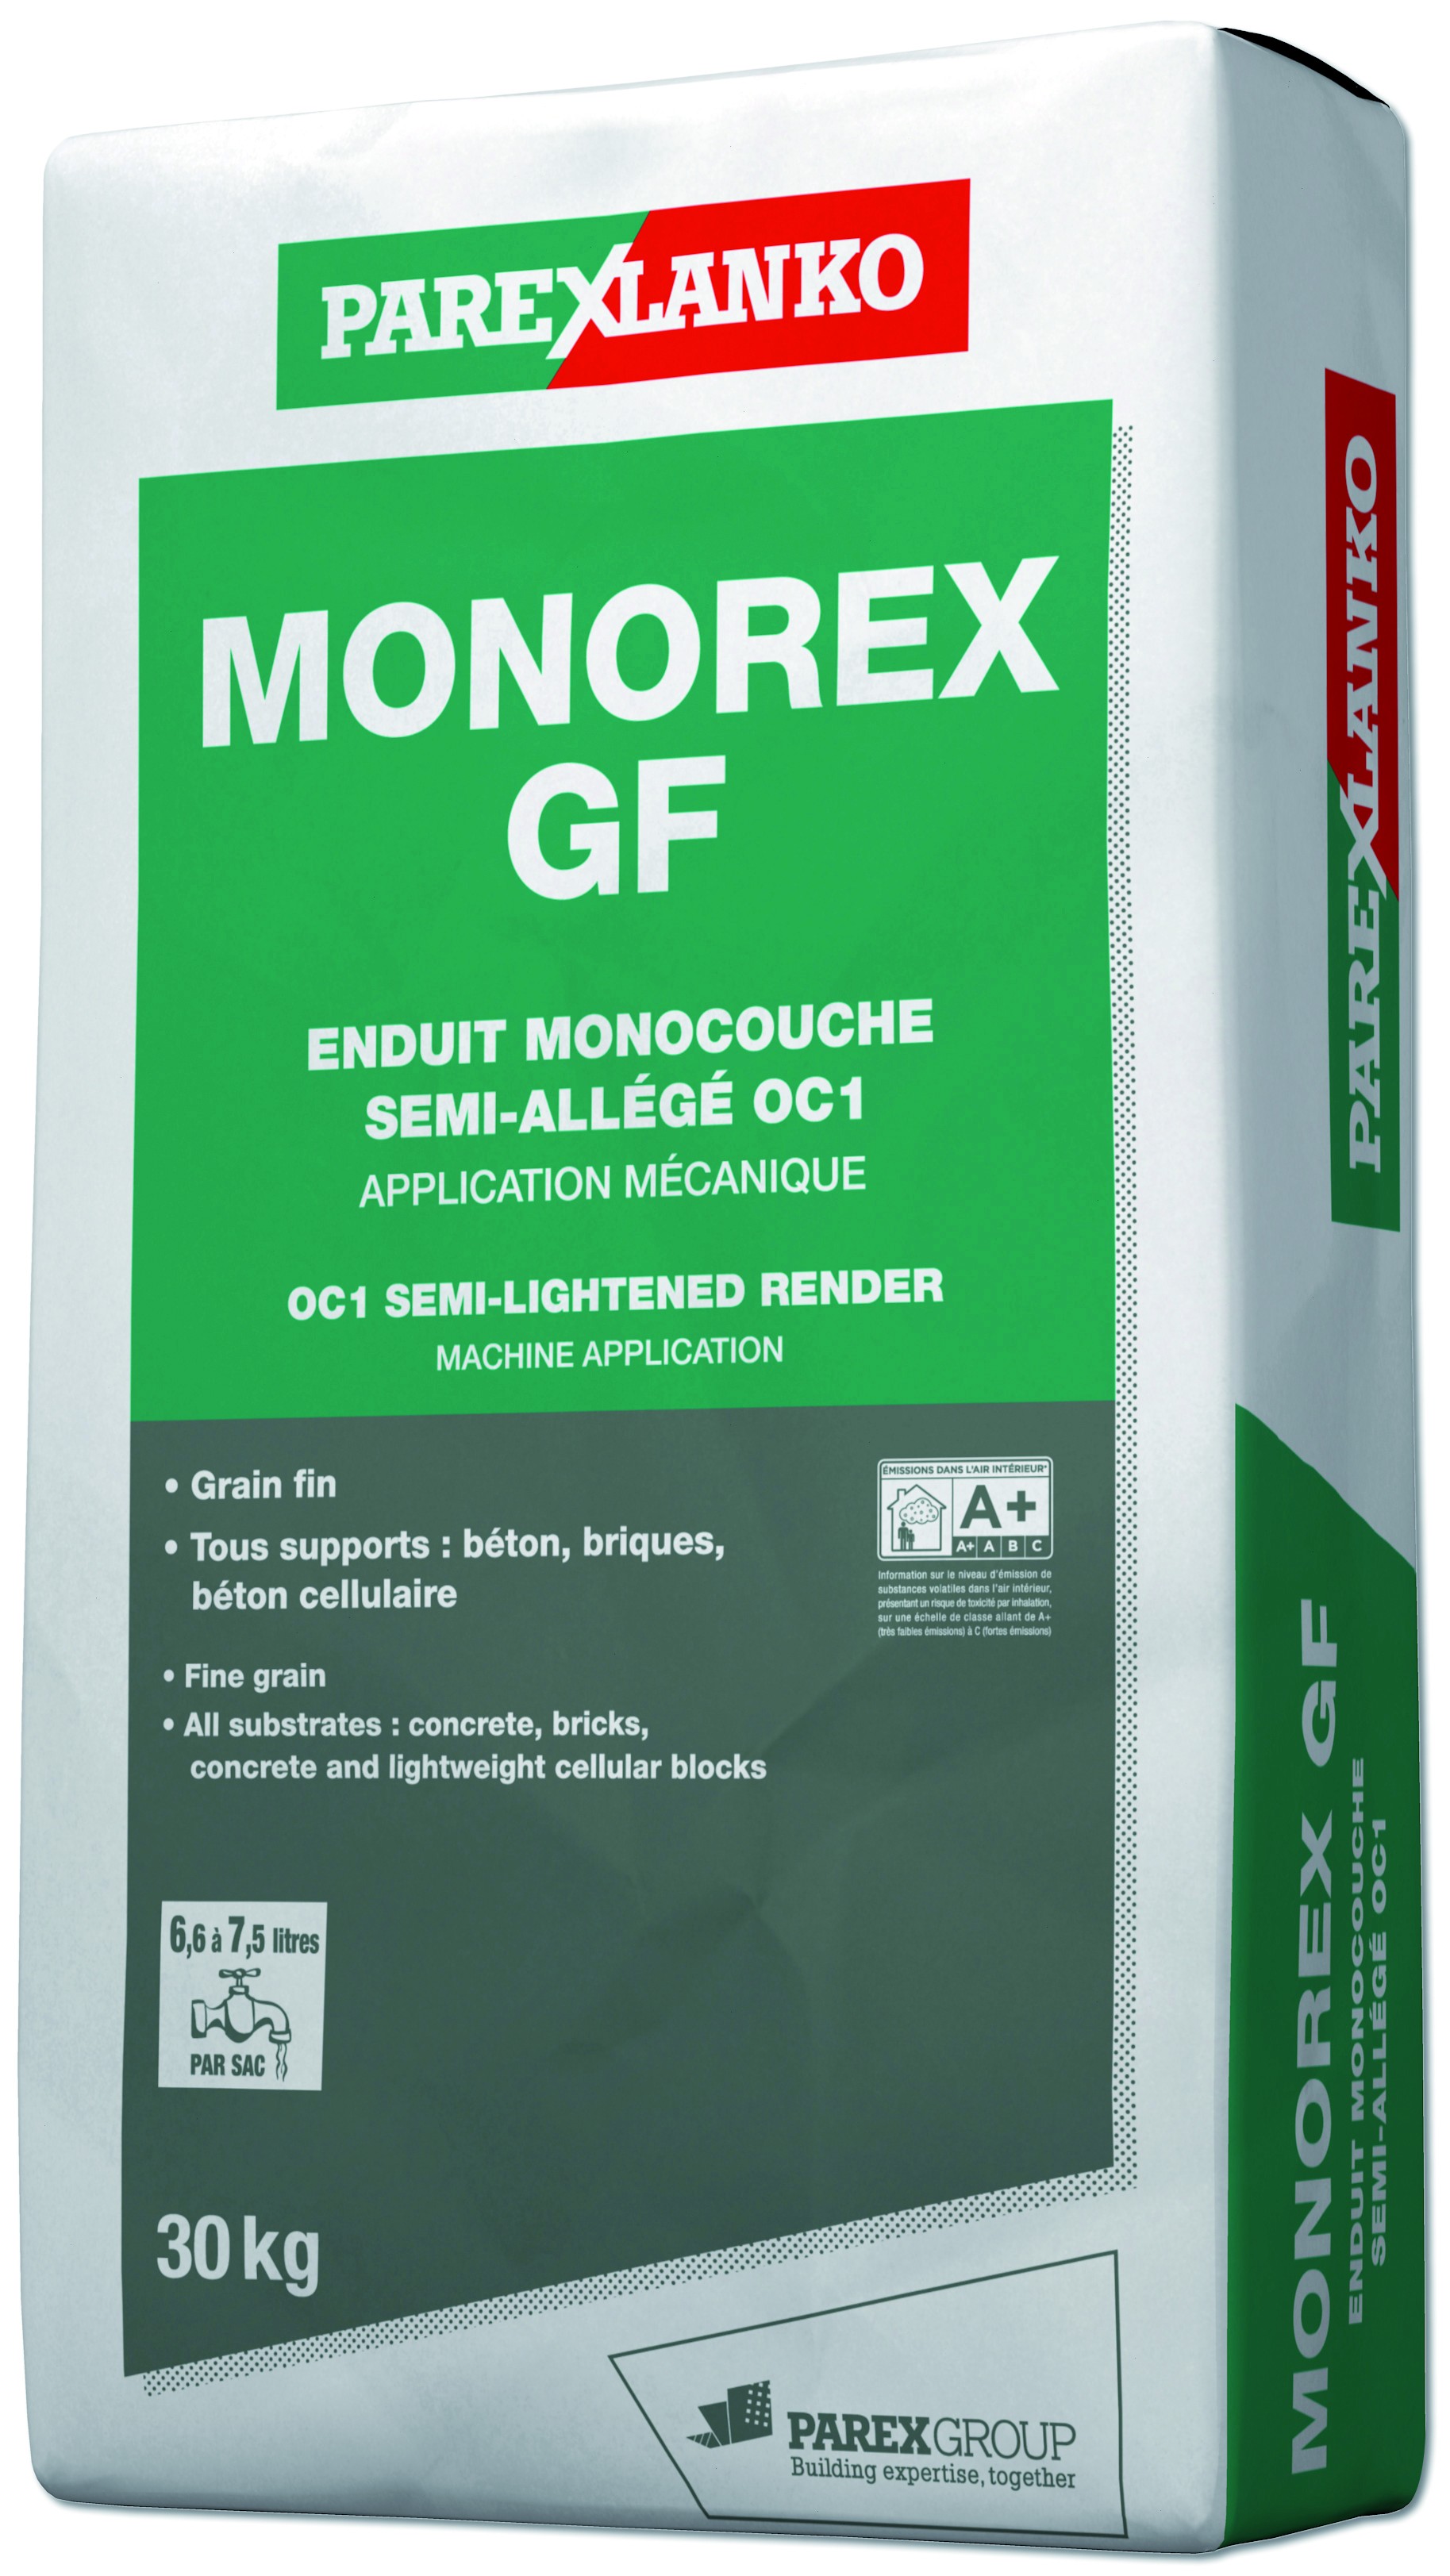 Enduit MONOCOUCHE semi-allégé grain fin Monorex GF Parexlanko